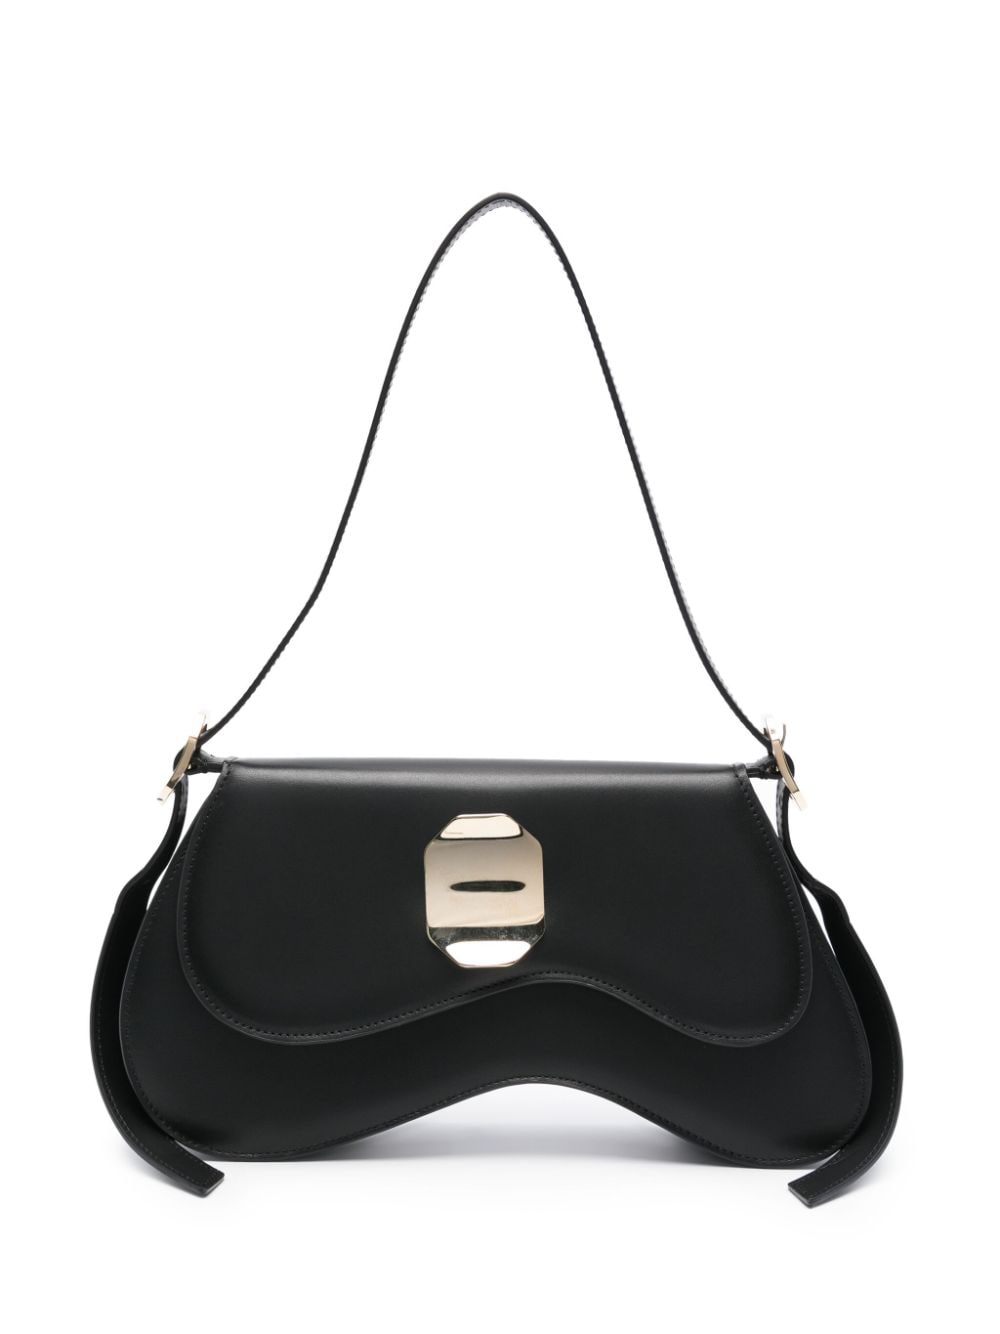 Malone Souliers Divine asymmetric leather bag - Black von Malone Souliers